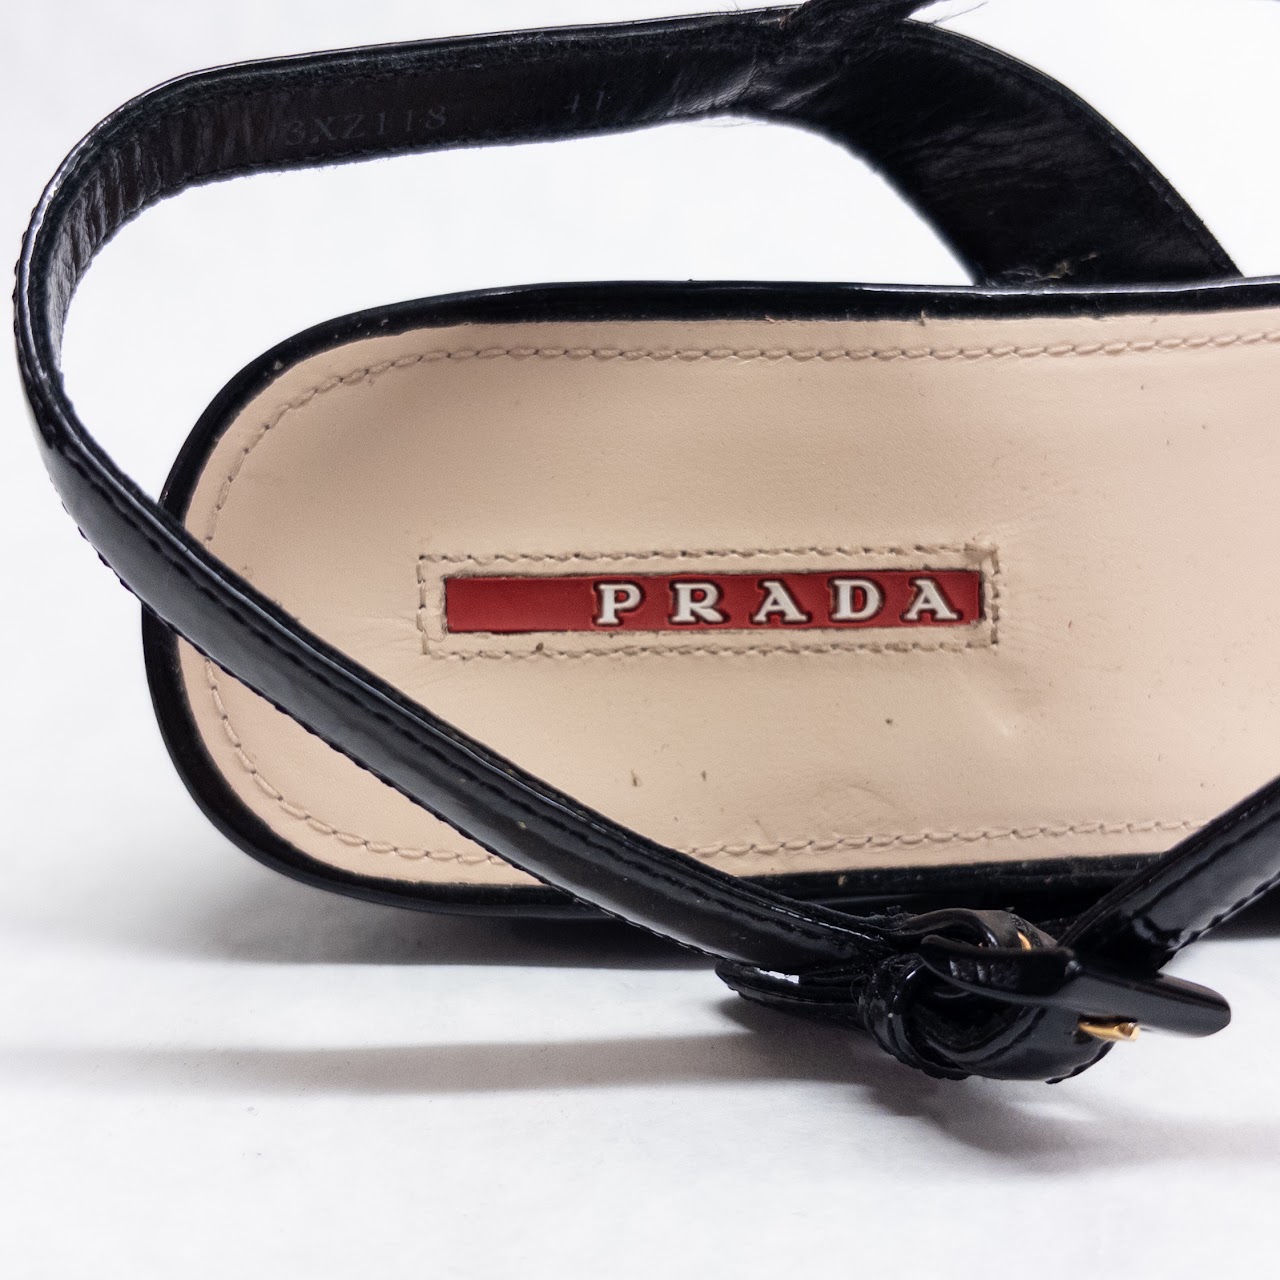 Prada Patent Leather Platform Heels